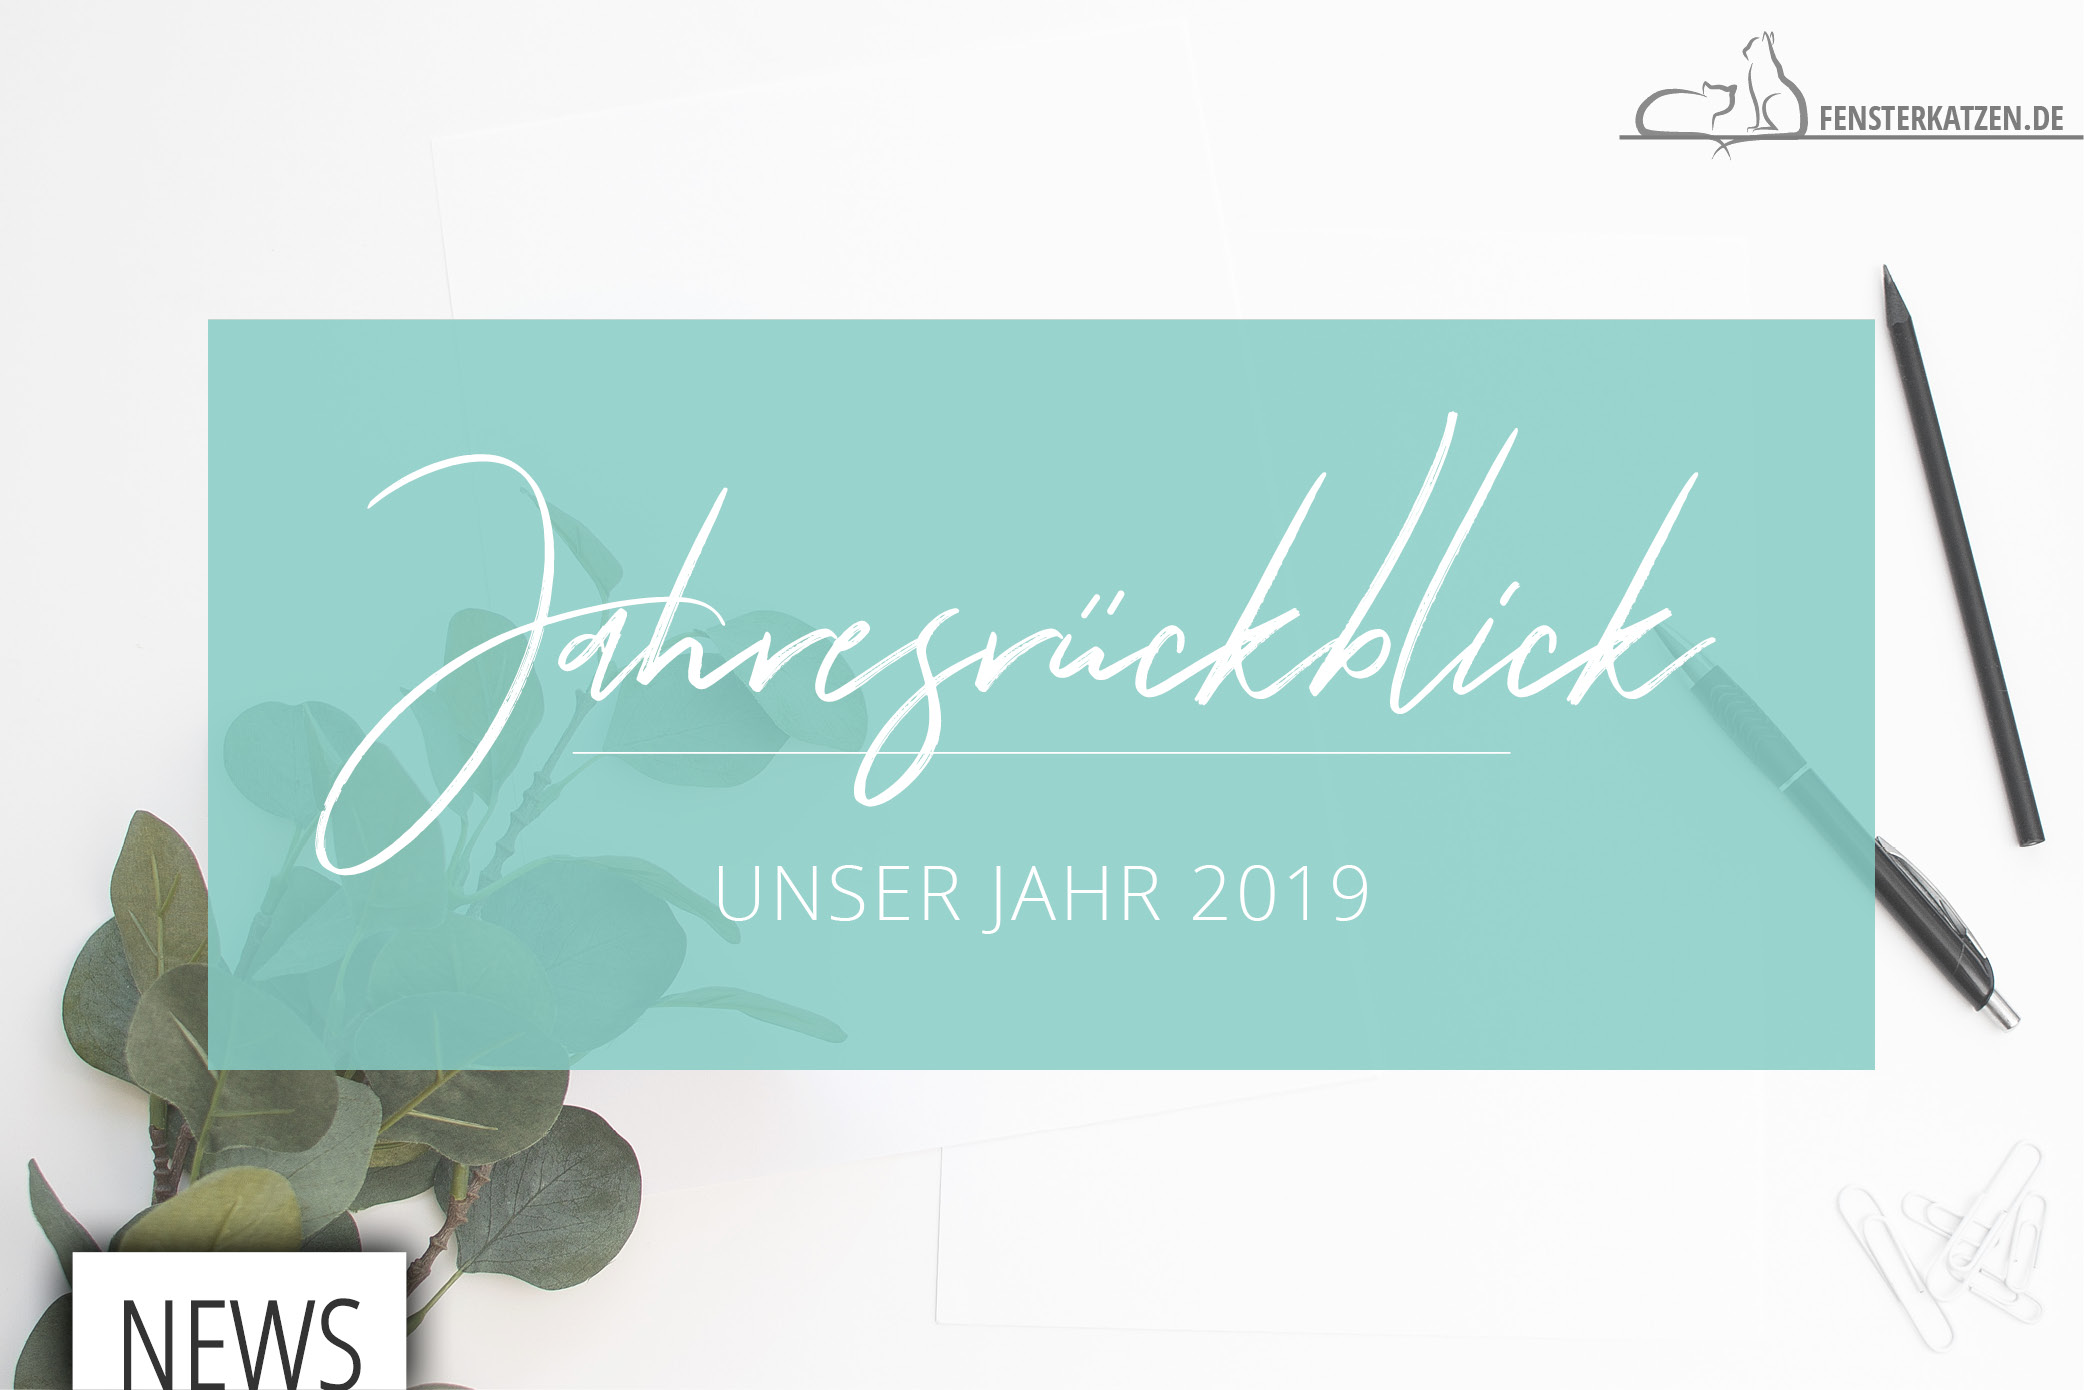 Fensterkatzen-News-Jahresrueckblick-2019-Titelbild